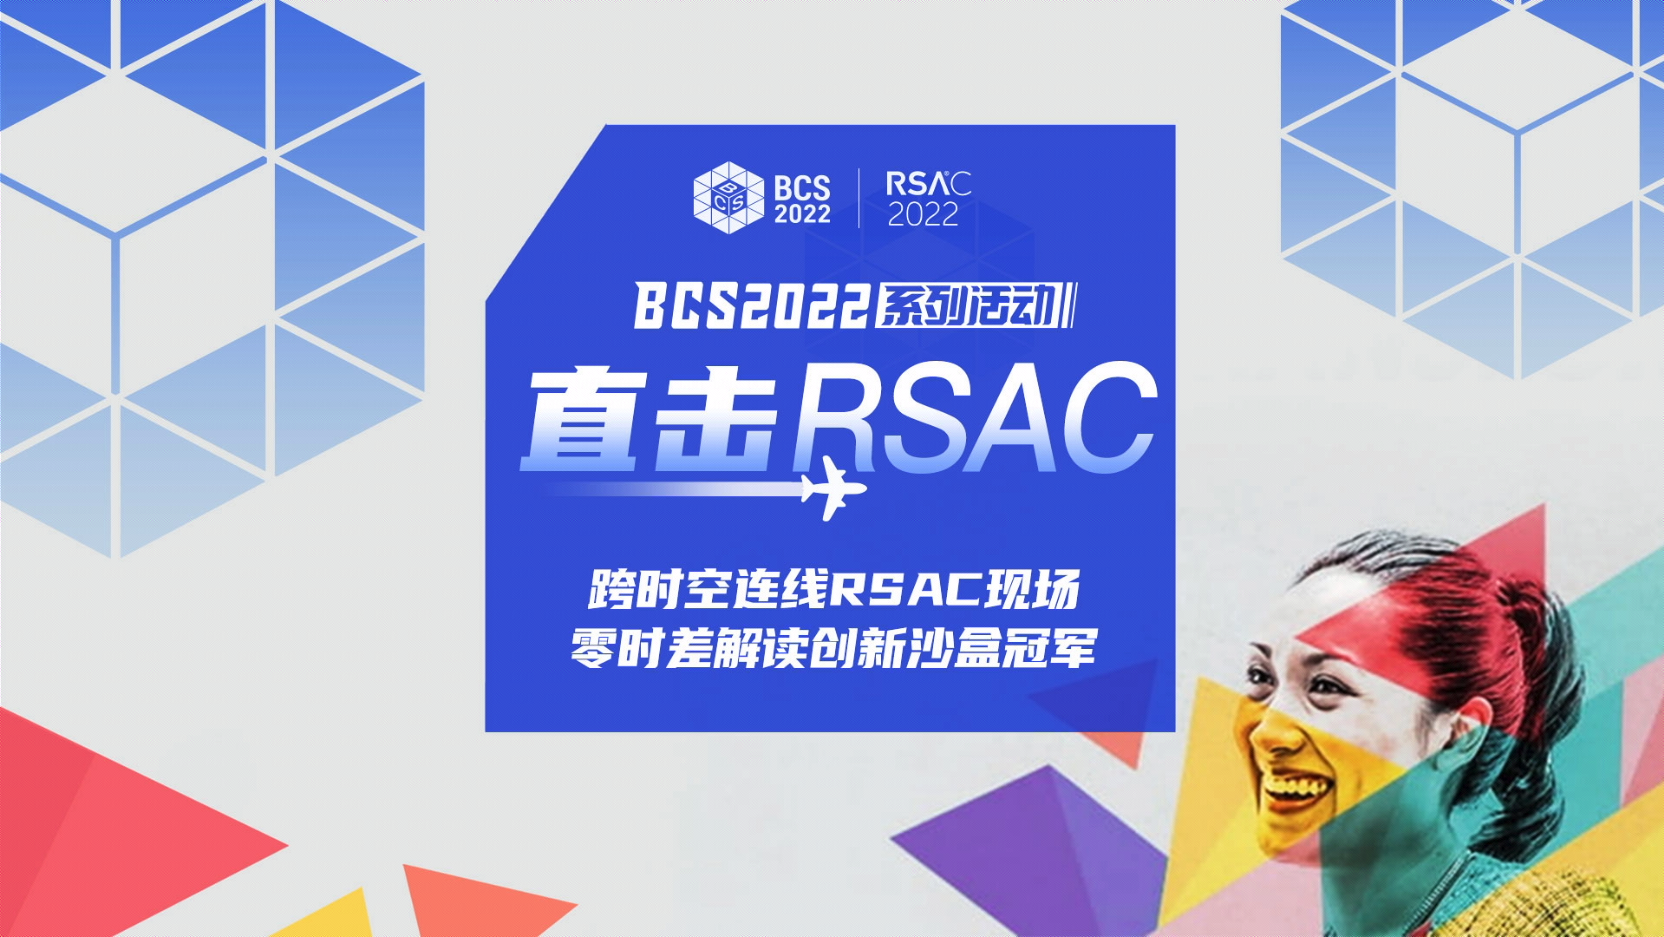 RSAC 2022 | 跨時空連線RSAC現場 零時差解讀創新沙盒冠軍